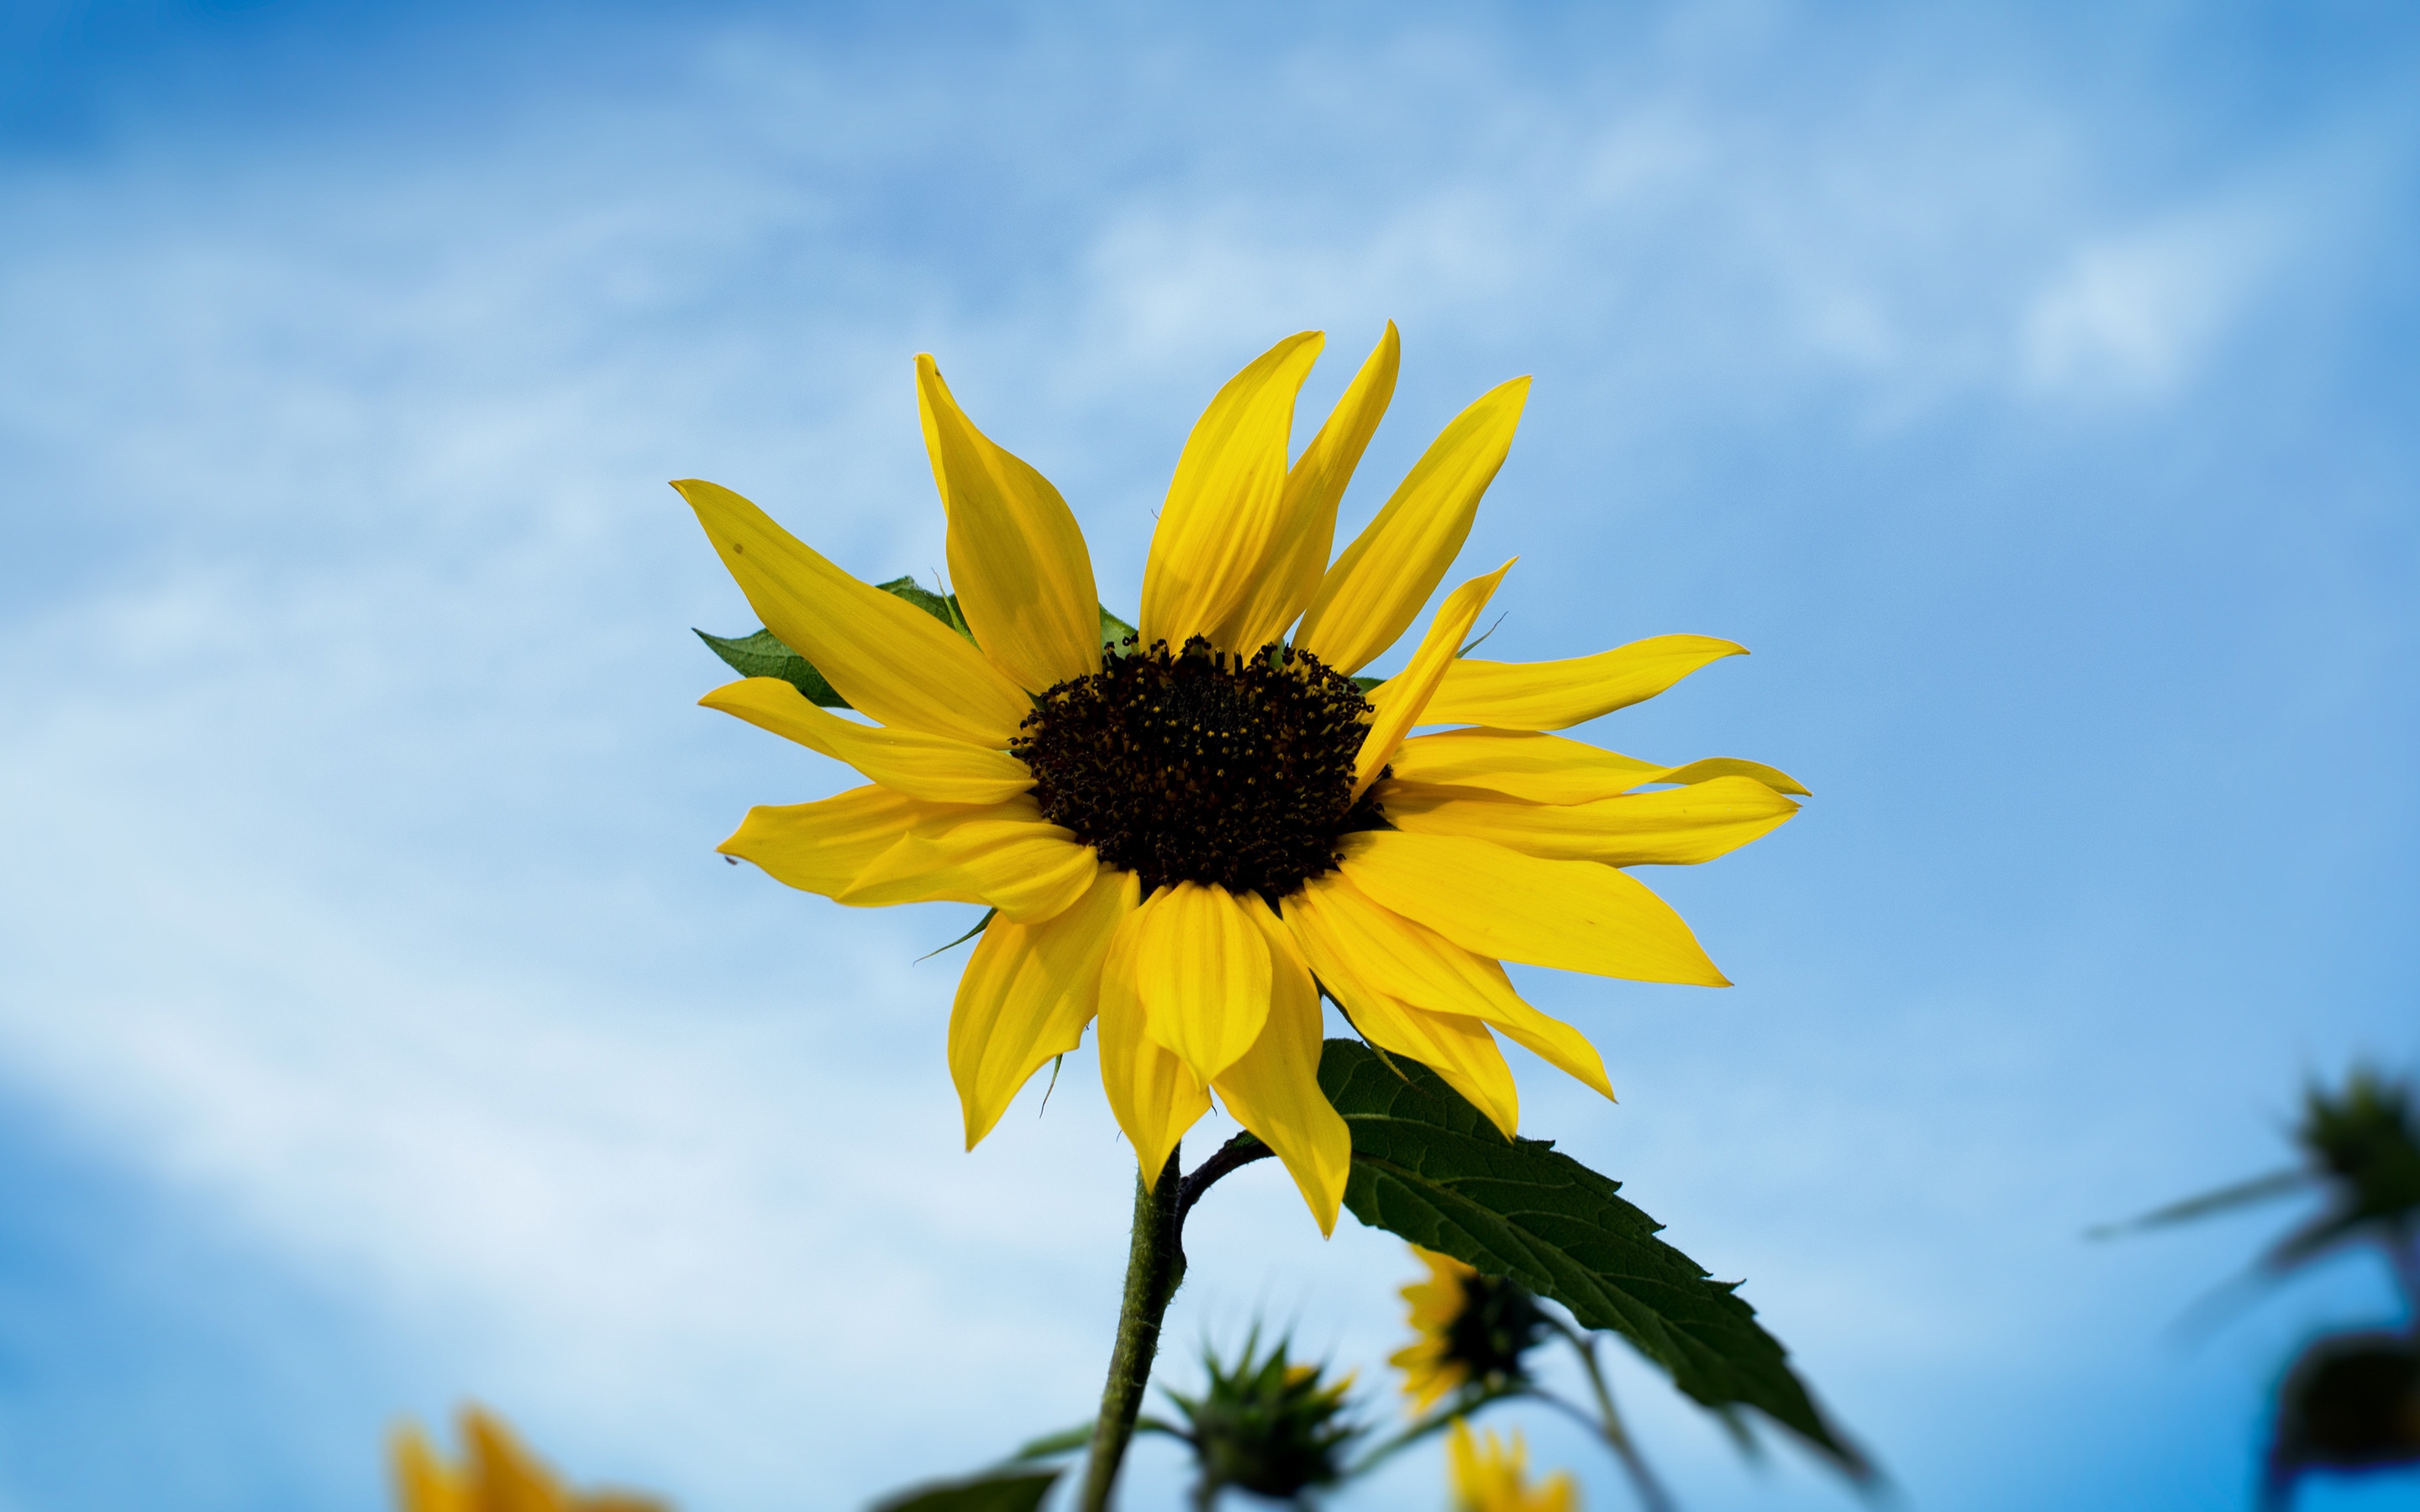 Single Sunflower for 2880 x 1800 Retina Display resolution